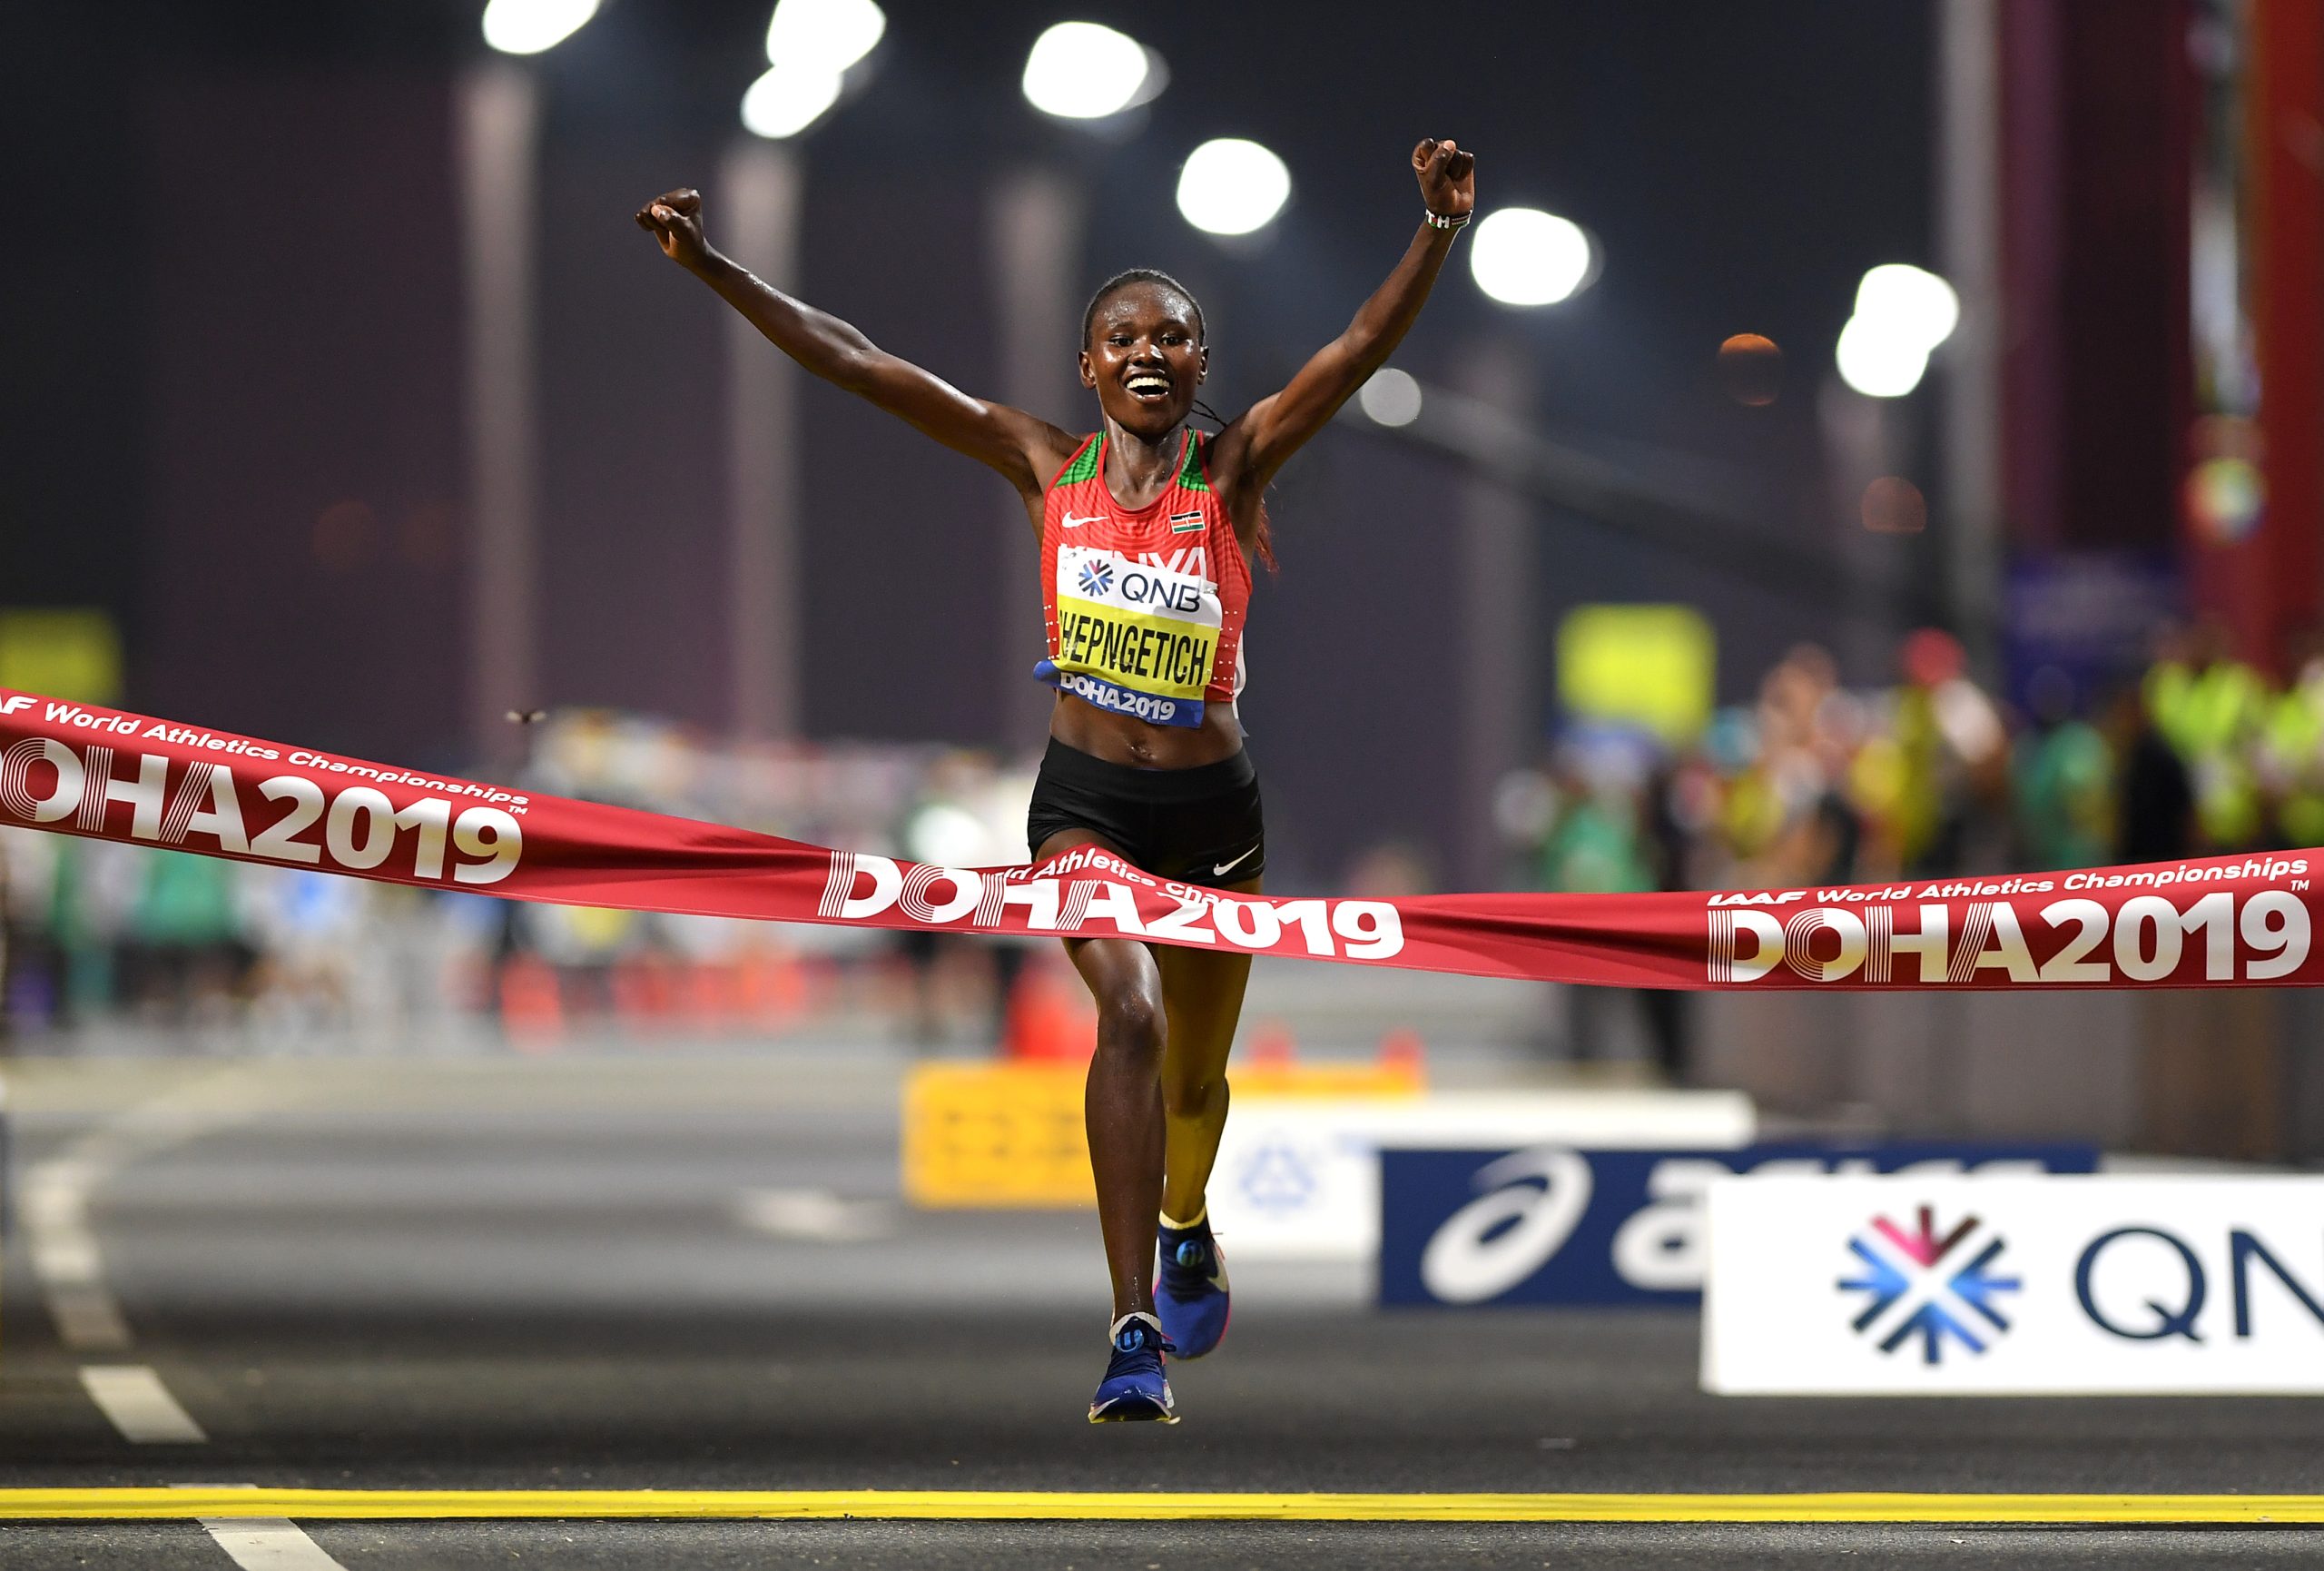 Ruth Chepngetich winning the 2019 World Athletics Championships Women's Marathon in Doha, Qatar (photo by Getty Images for World Athletics)